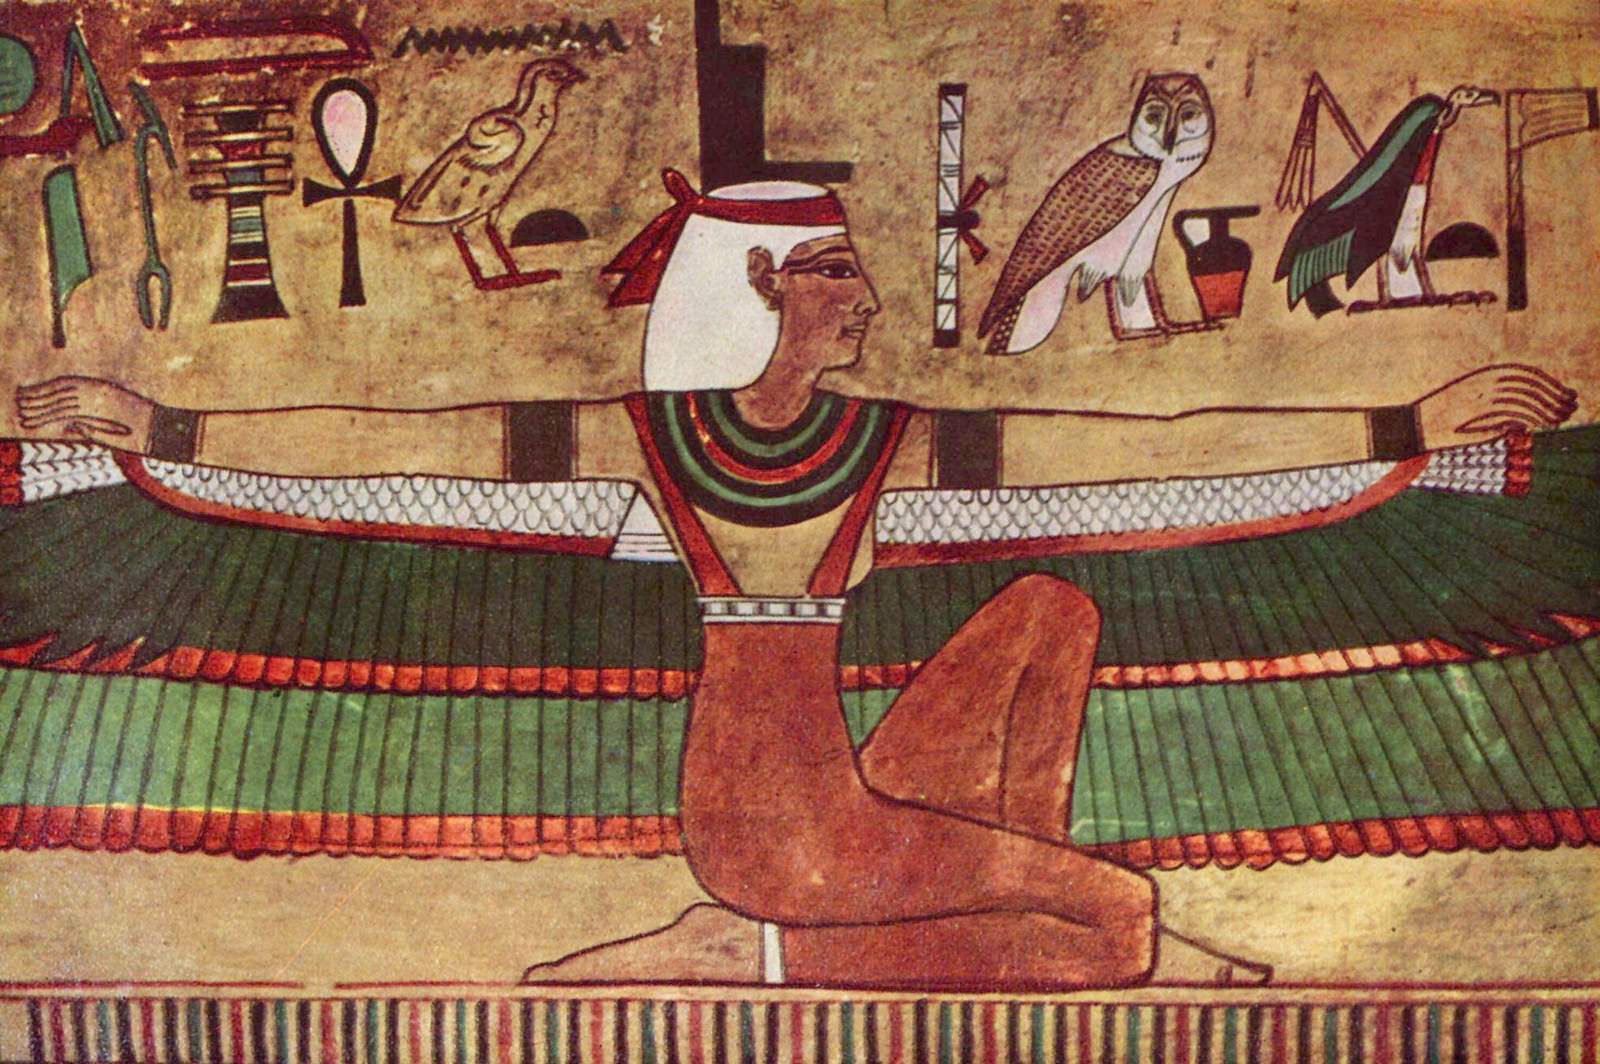 Isis Wall Painting (Illustration) - World History Encyclopedia